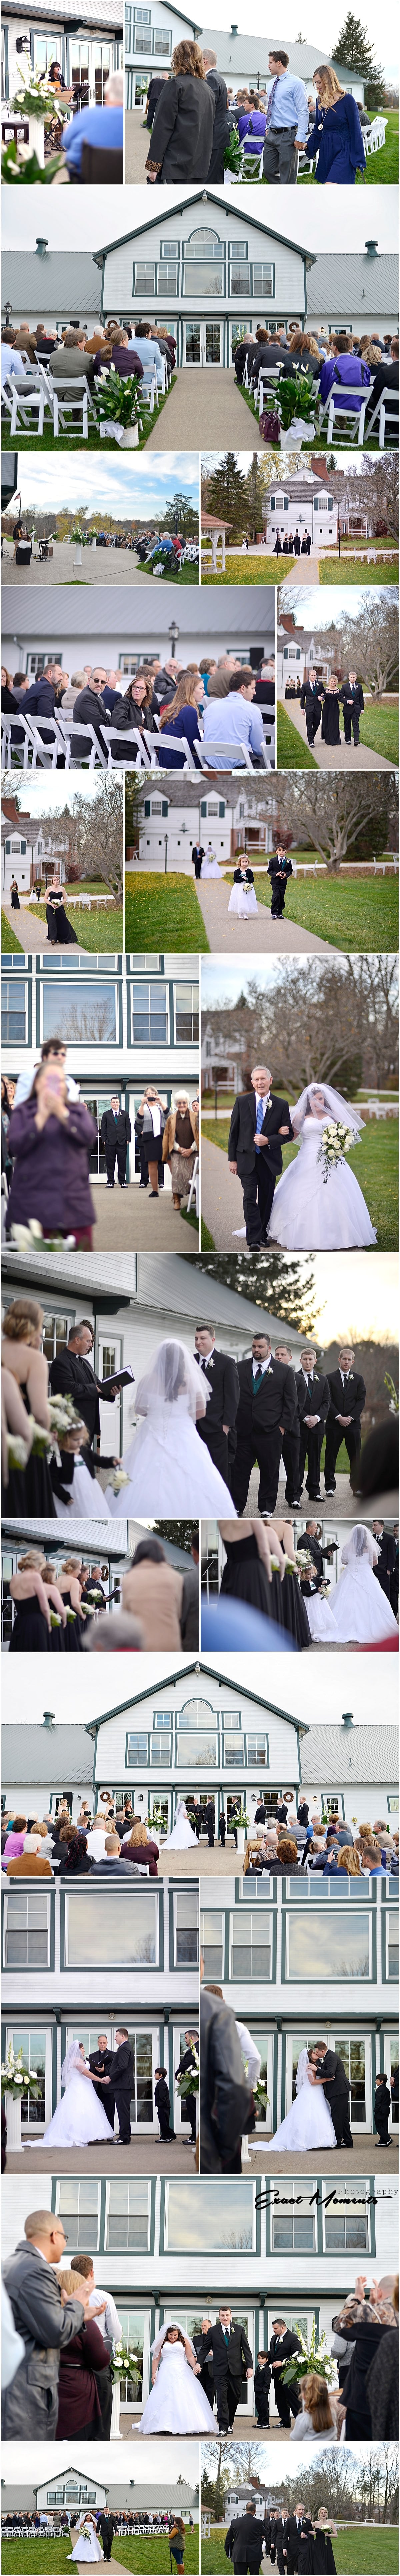 Little Brook Meadows wedding photos